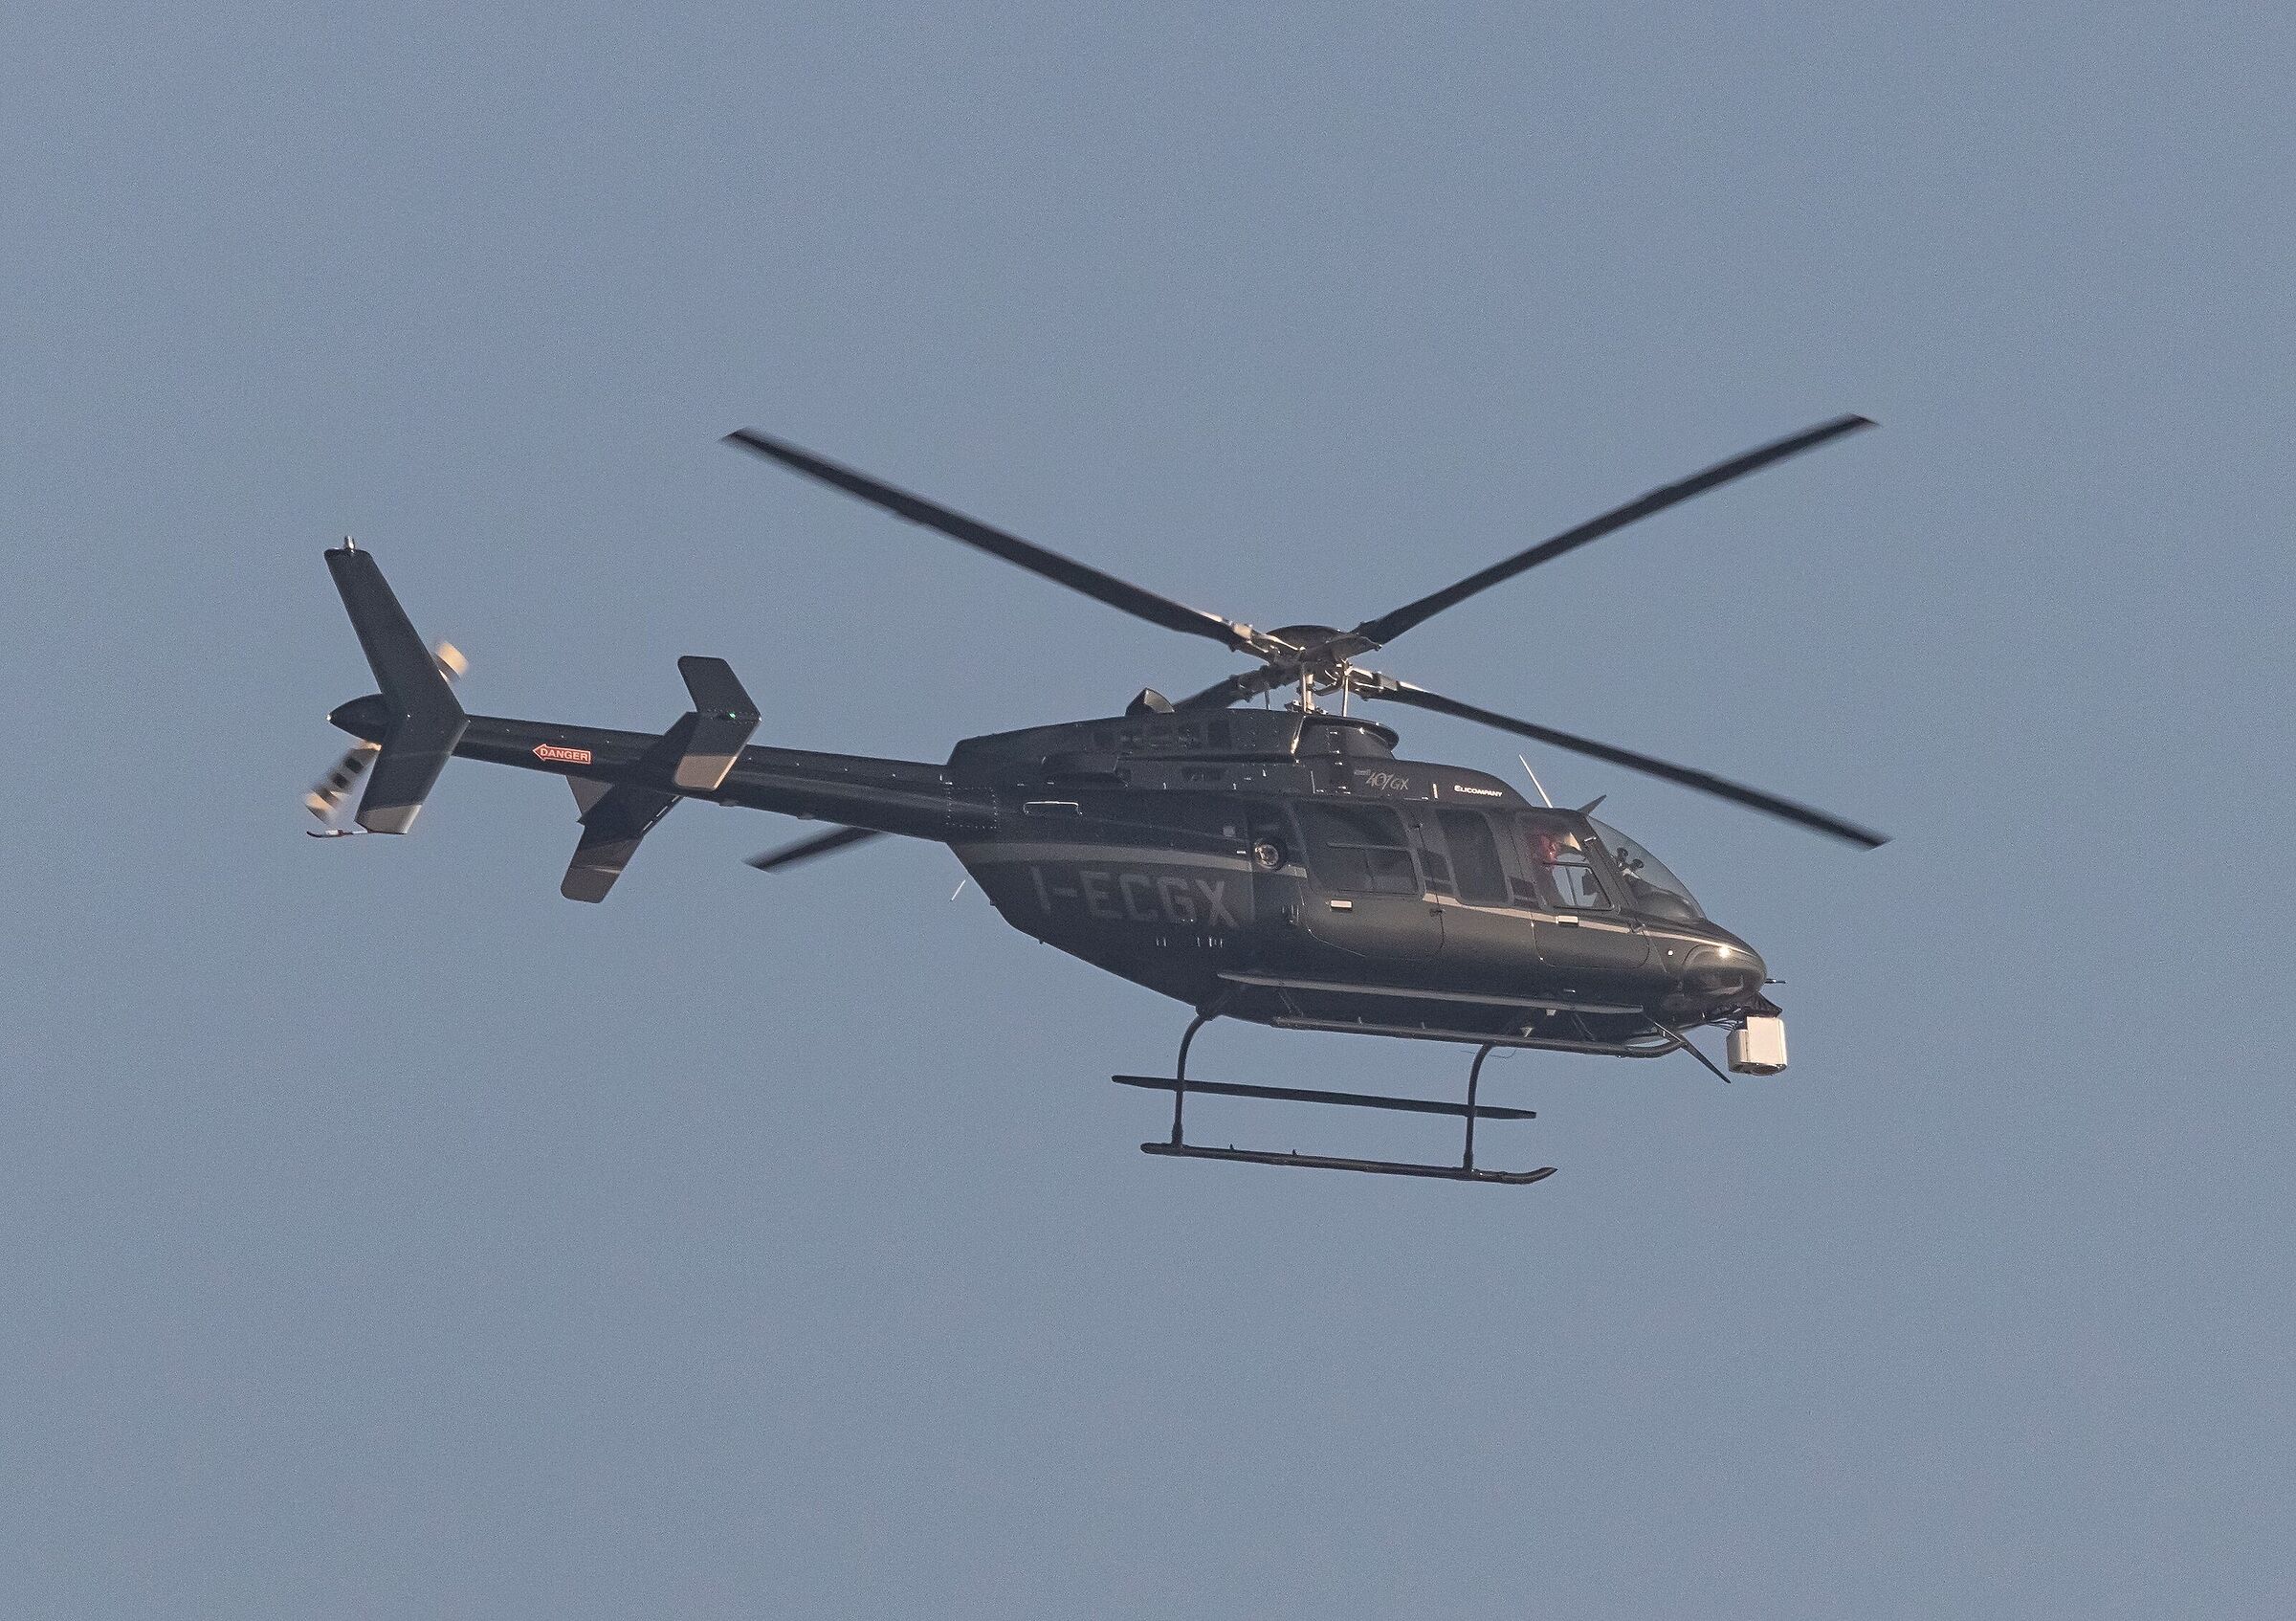 bell 407gx i-ecgx elicompany helicopter 26/11/2020...